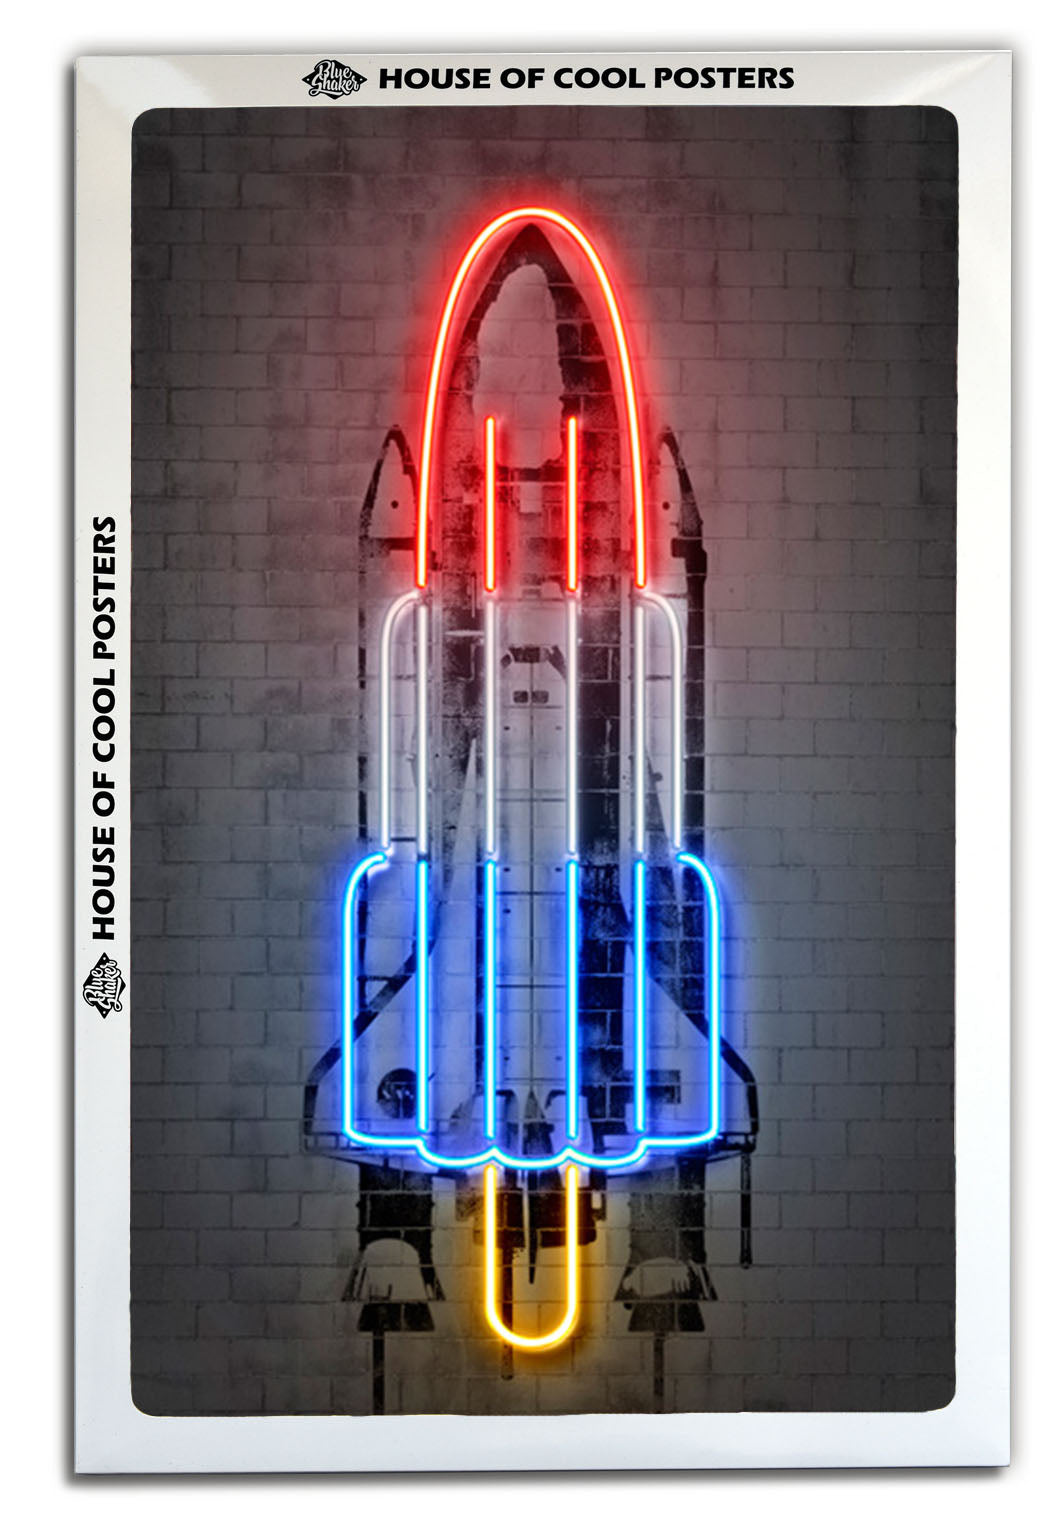 Neon Art -  Rocket